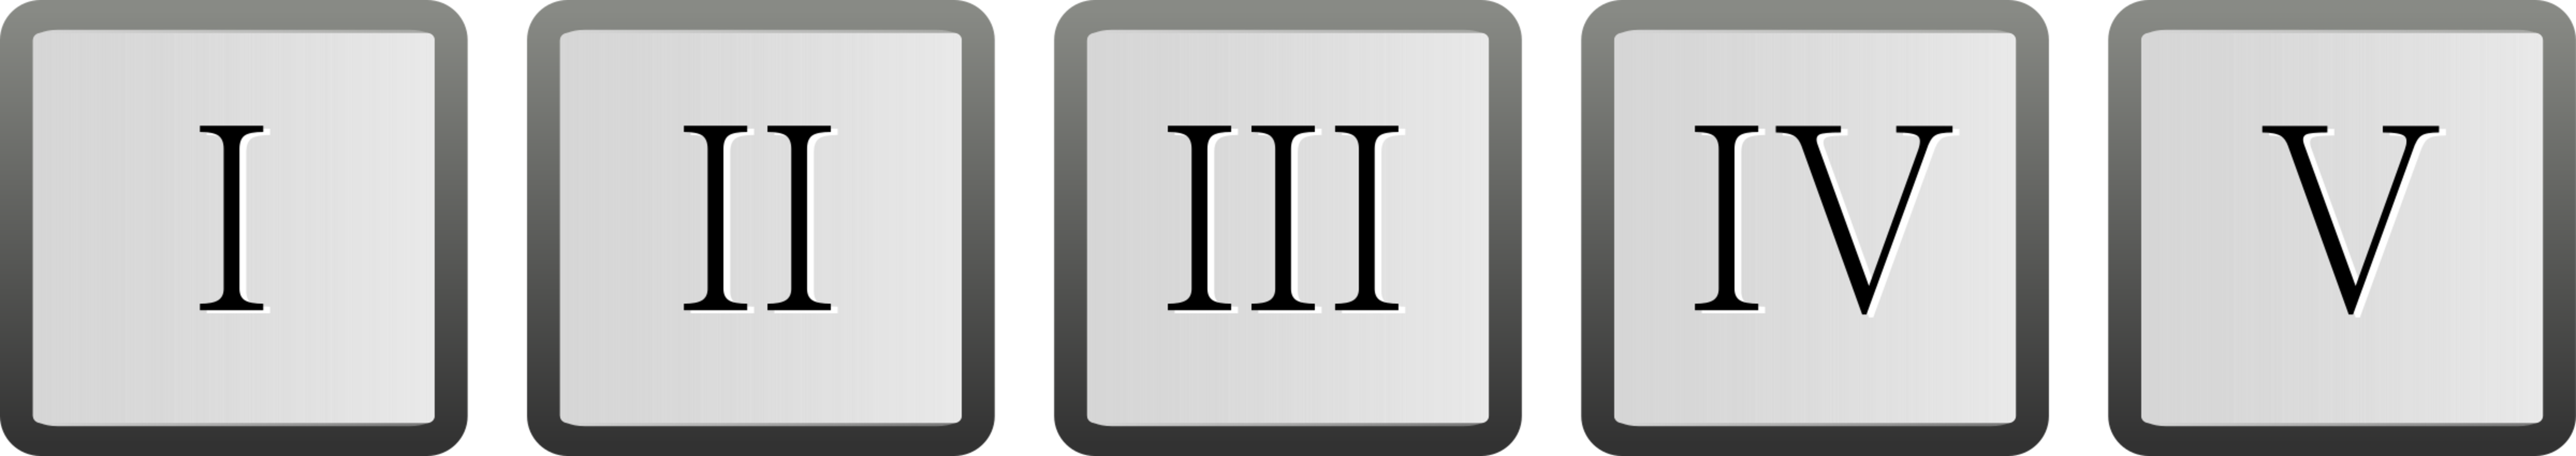 Roman Numerals Number Numerical Digit Computer Icons - Roman Numerals Icons (4235x750)